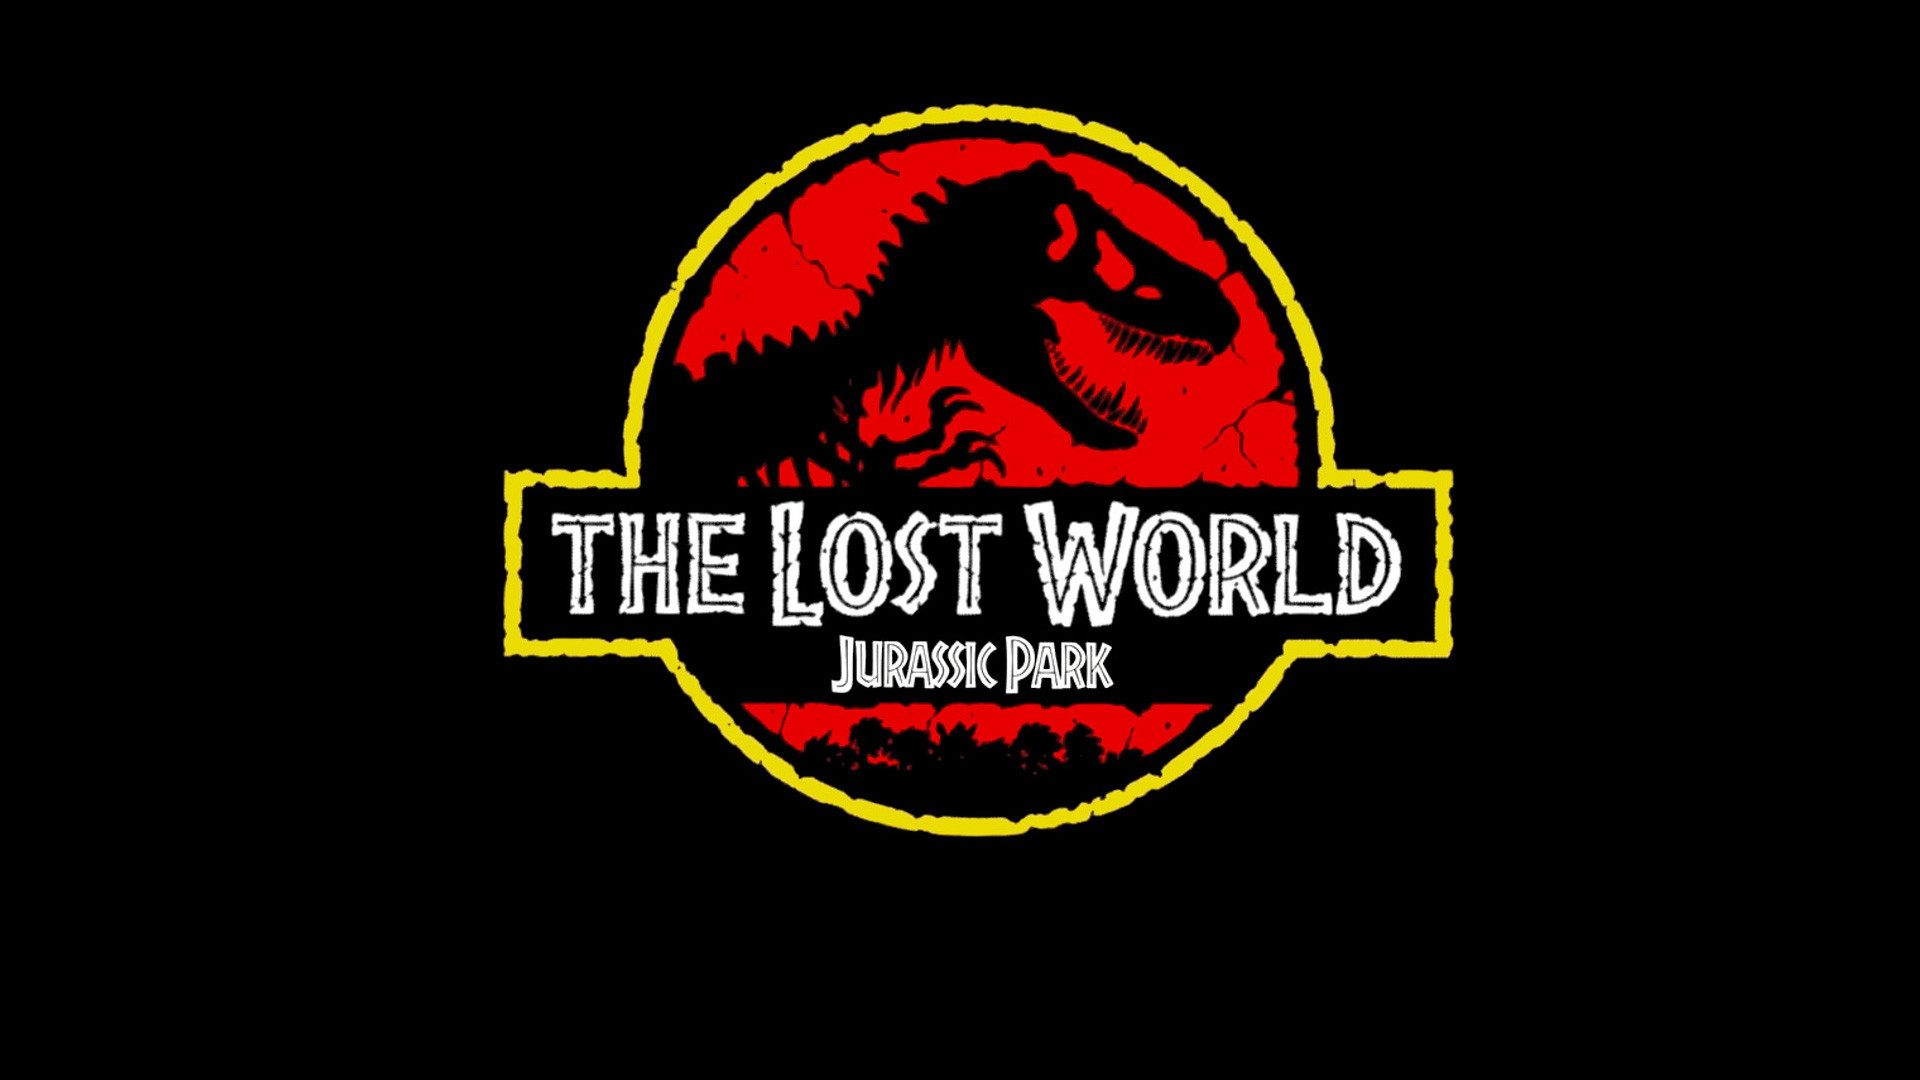 Just Watch Jurassic Park